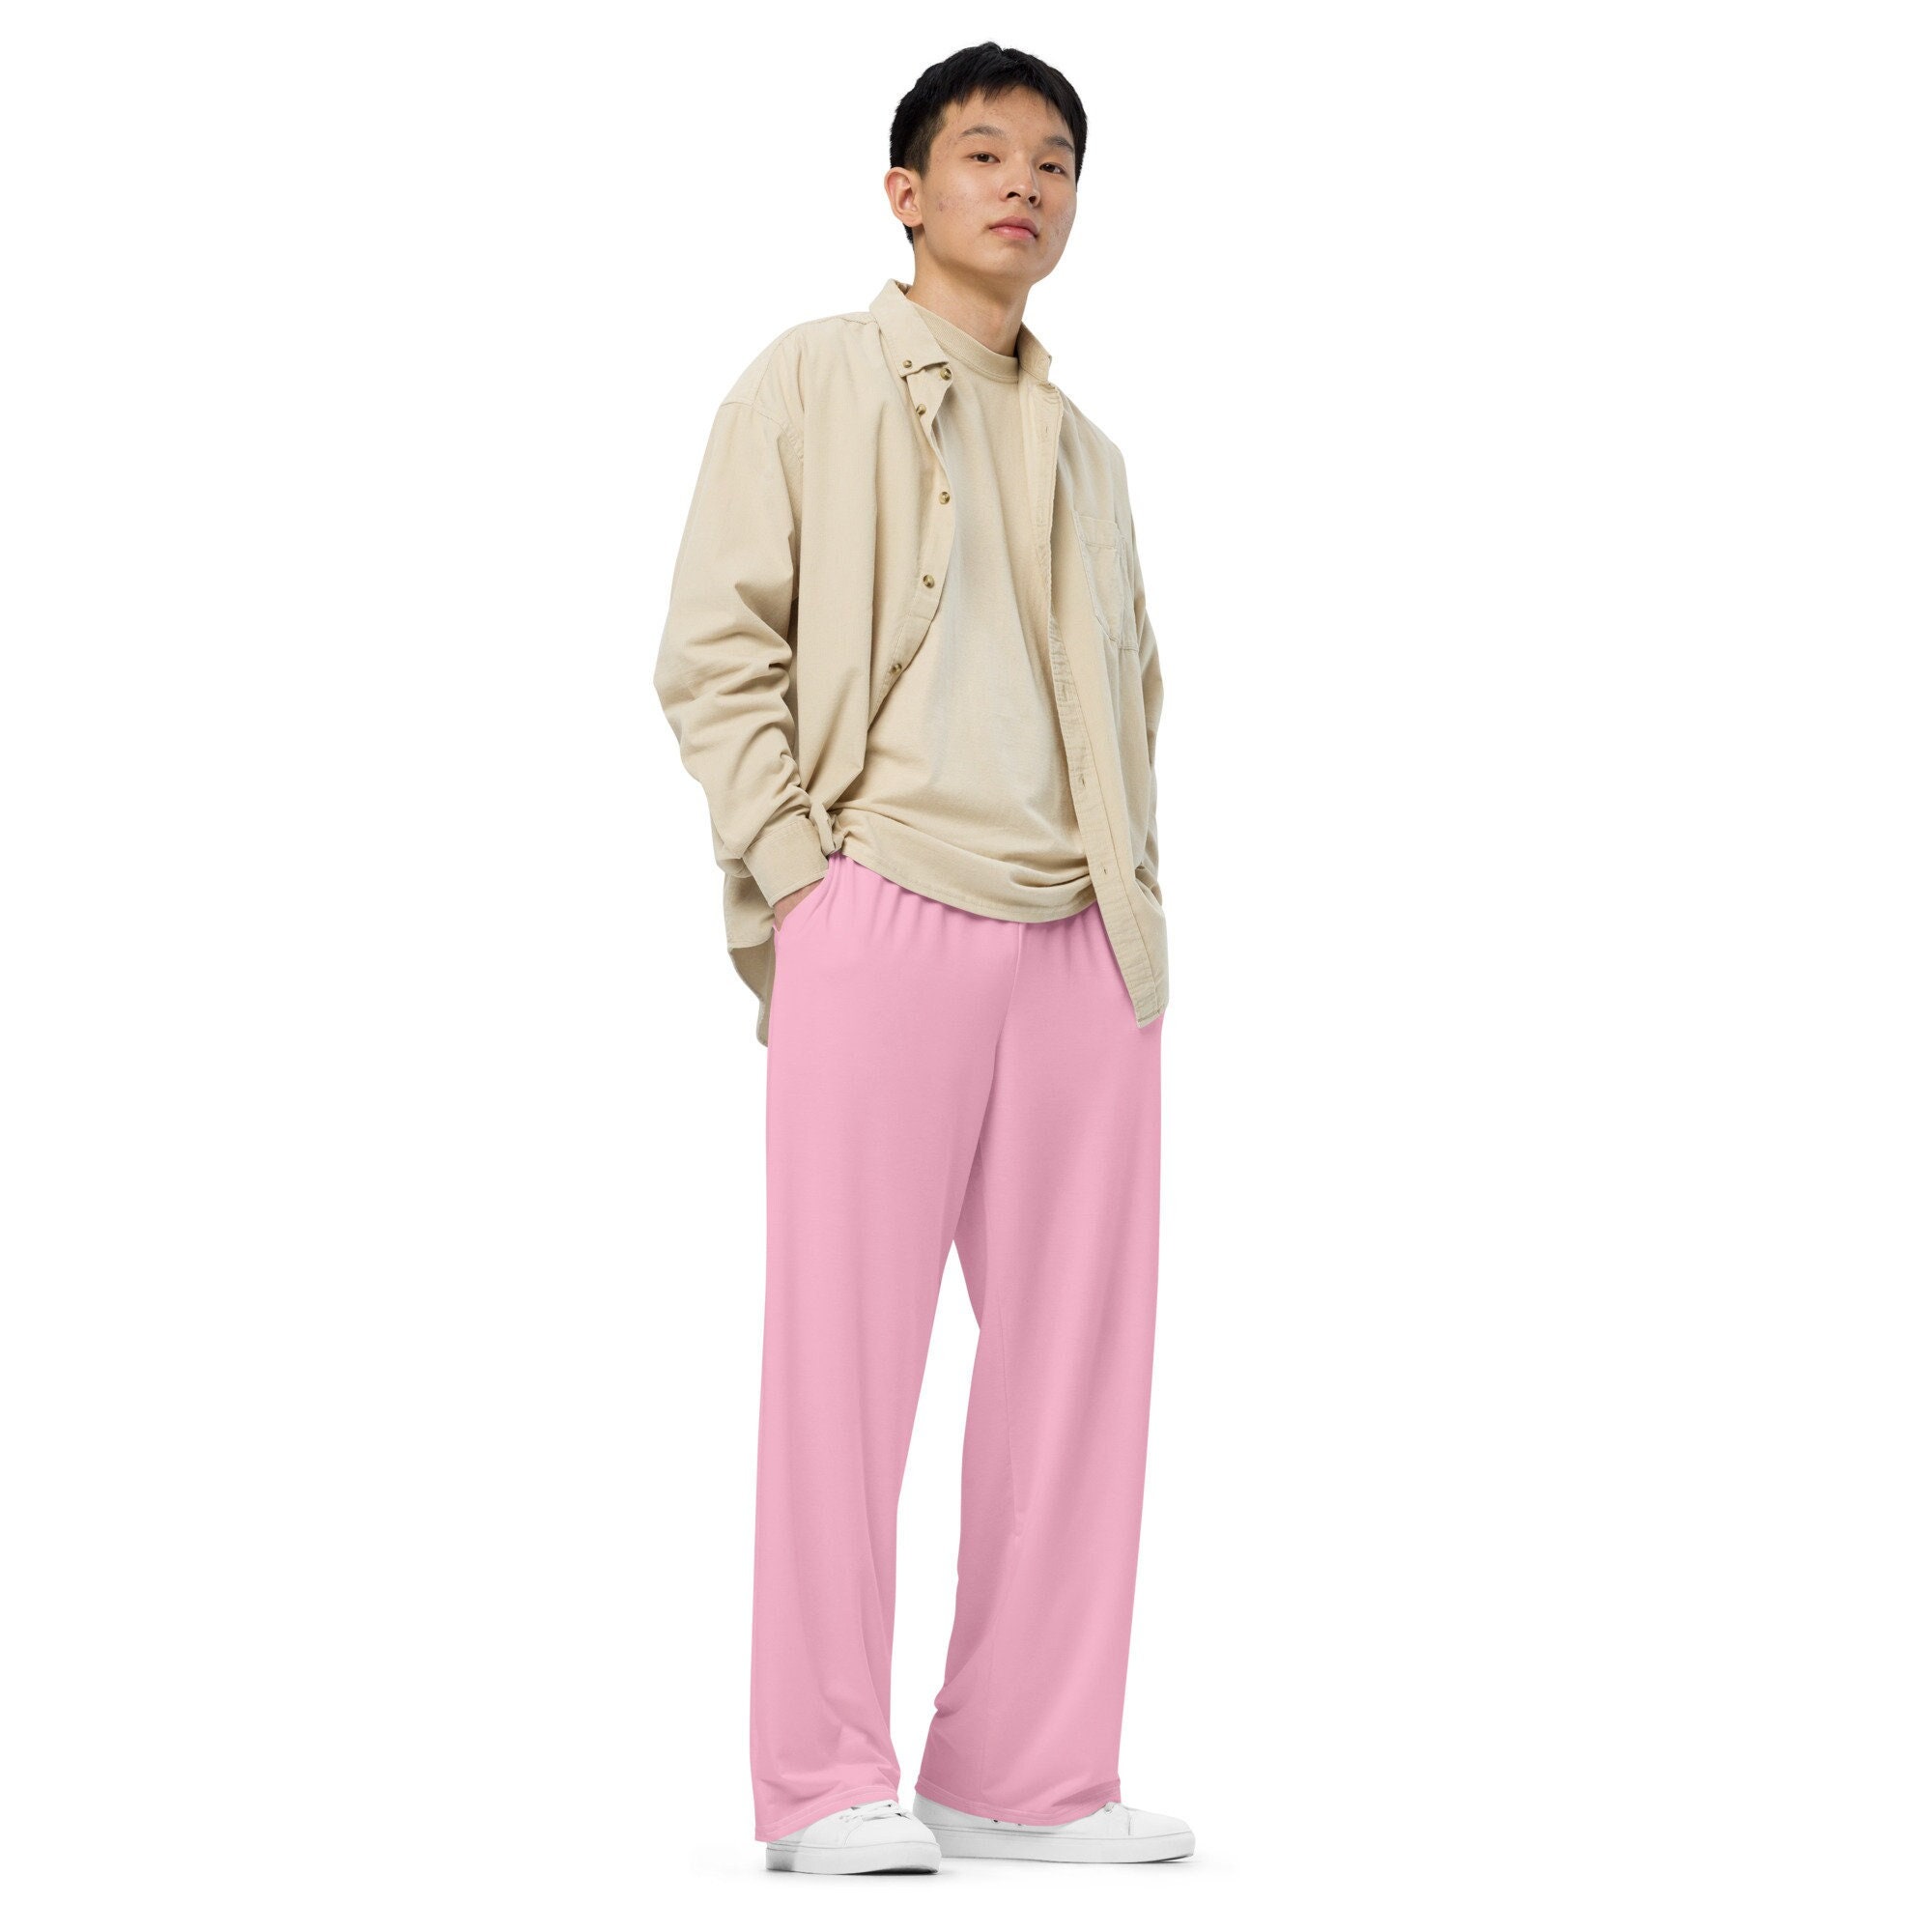 JNGSA Lounge Pants Men Casual Silk Pajama Trousers Lace Up Elastic Pants  Hip Hop Fluorescent Pants Night Sports Pants Navy Clearance